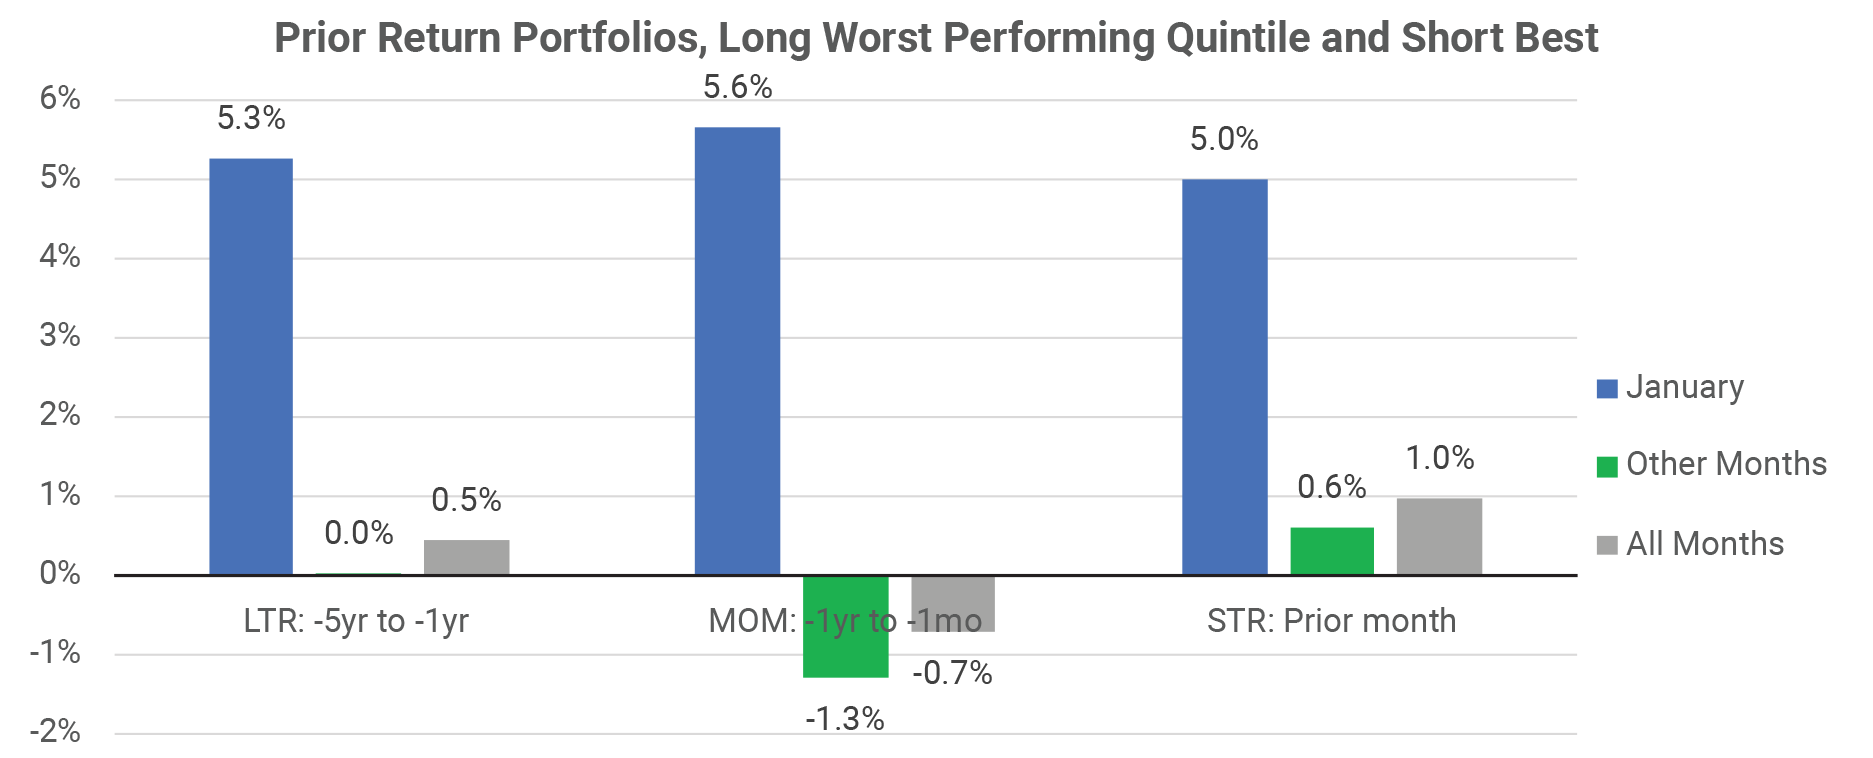 Prior Return Portfolios, Long Worst Performing Quintile and Short Best